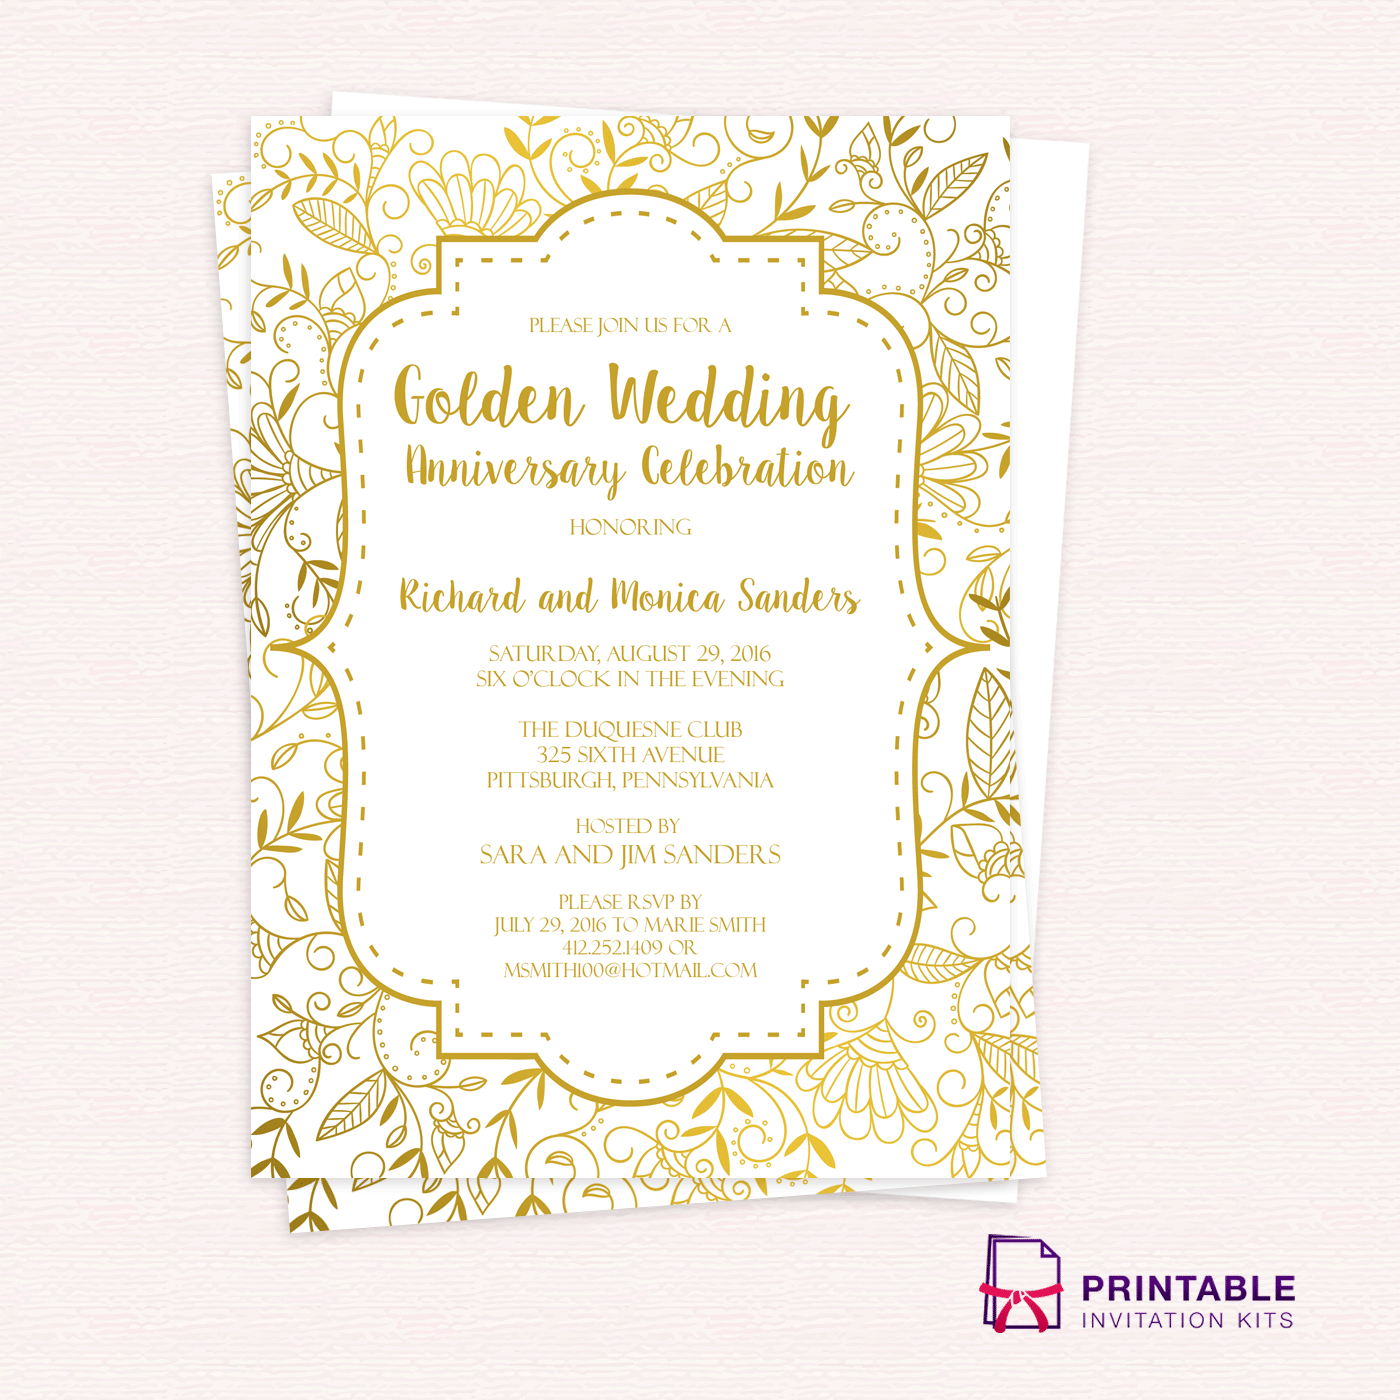 Golden Wedding Anniversary Invitation Template Wedding Invitation within sizing 1400 X 1400